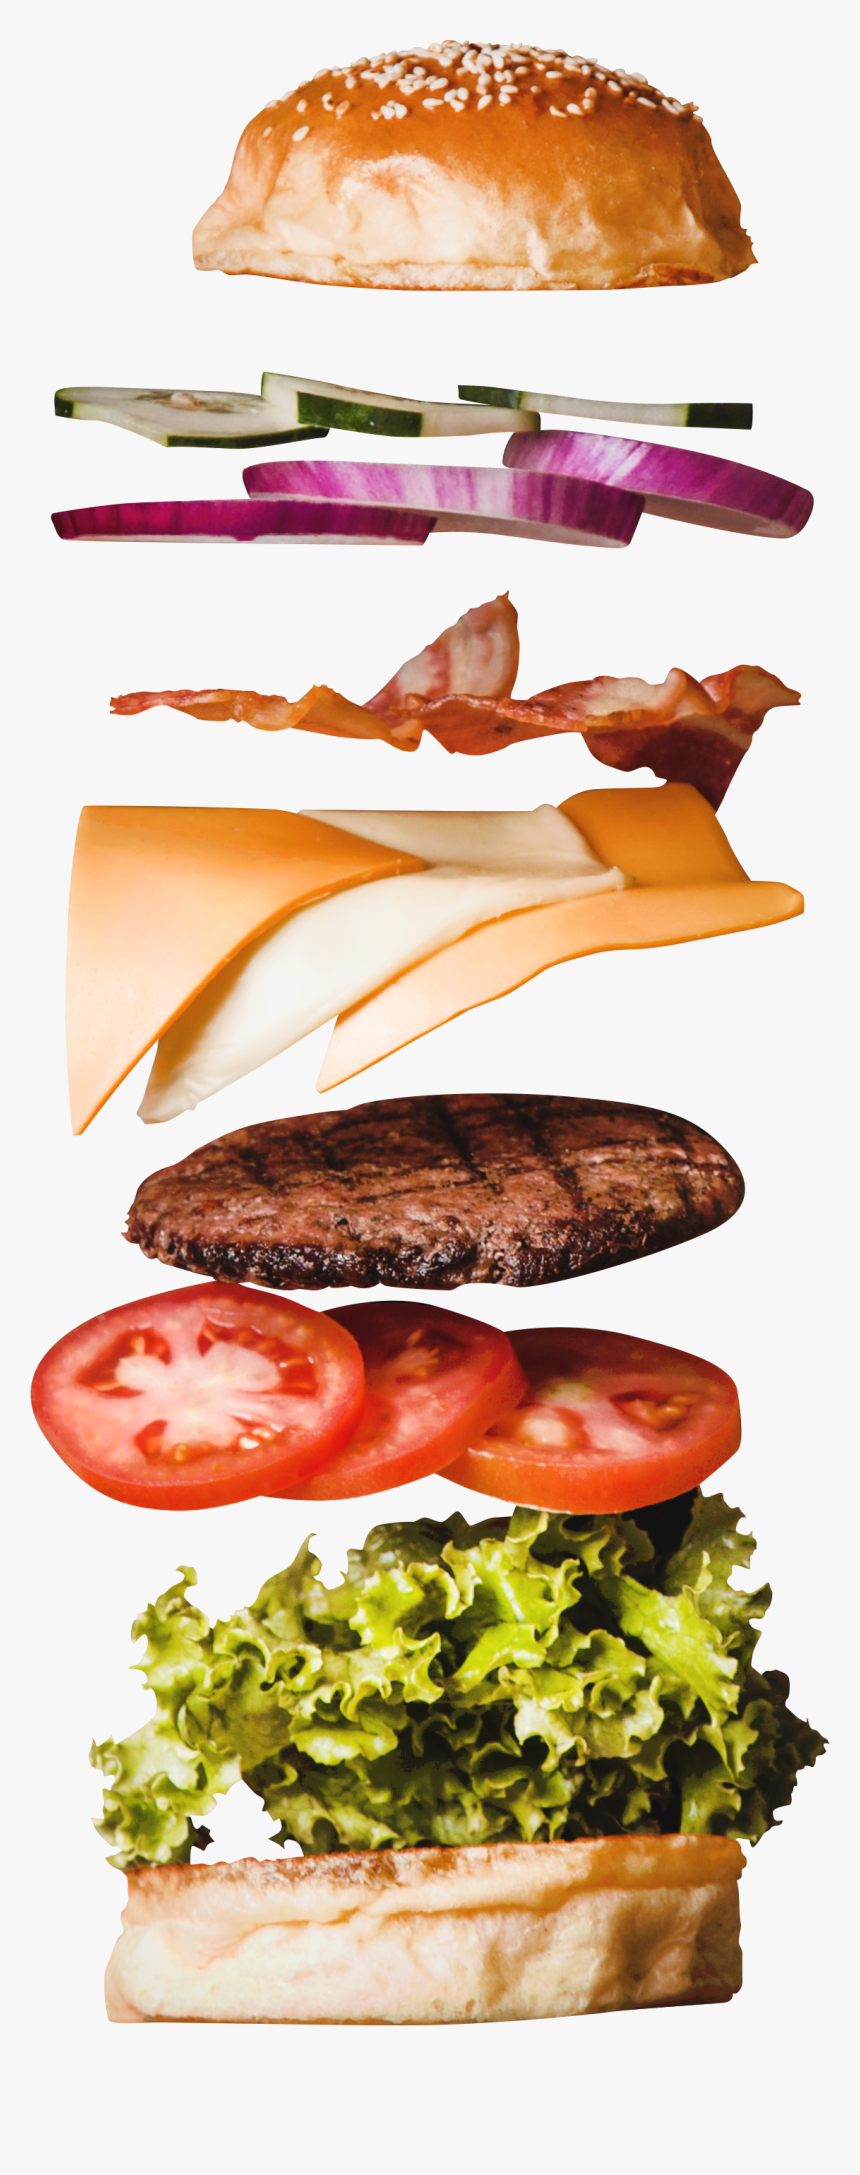 Cheeseburger Png, Transparent Png, Free Download